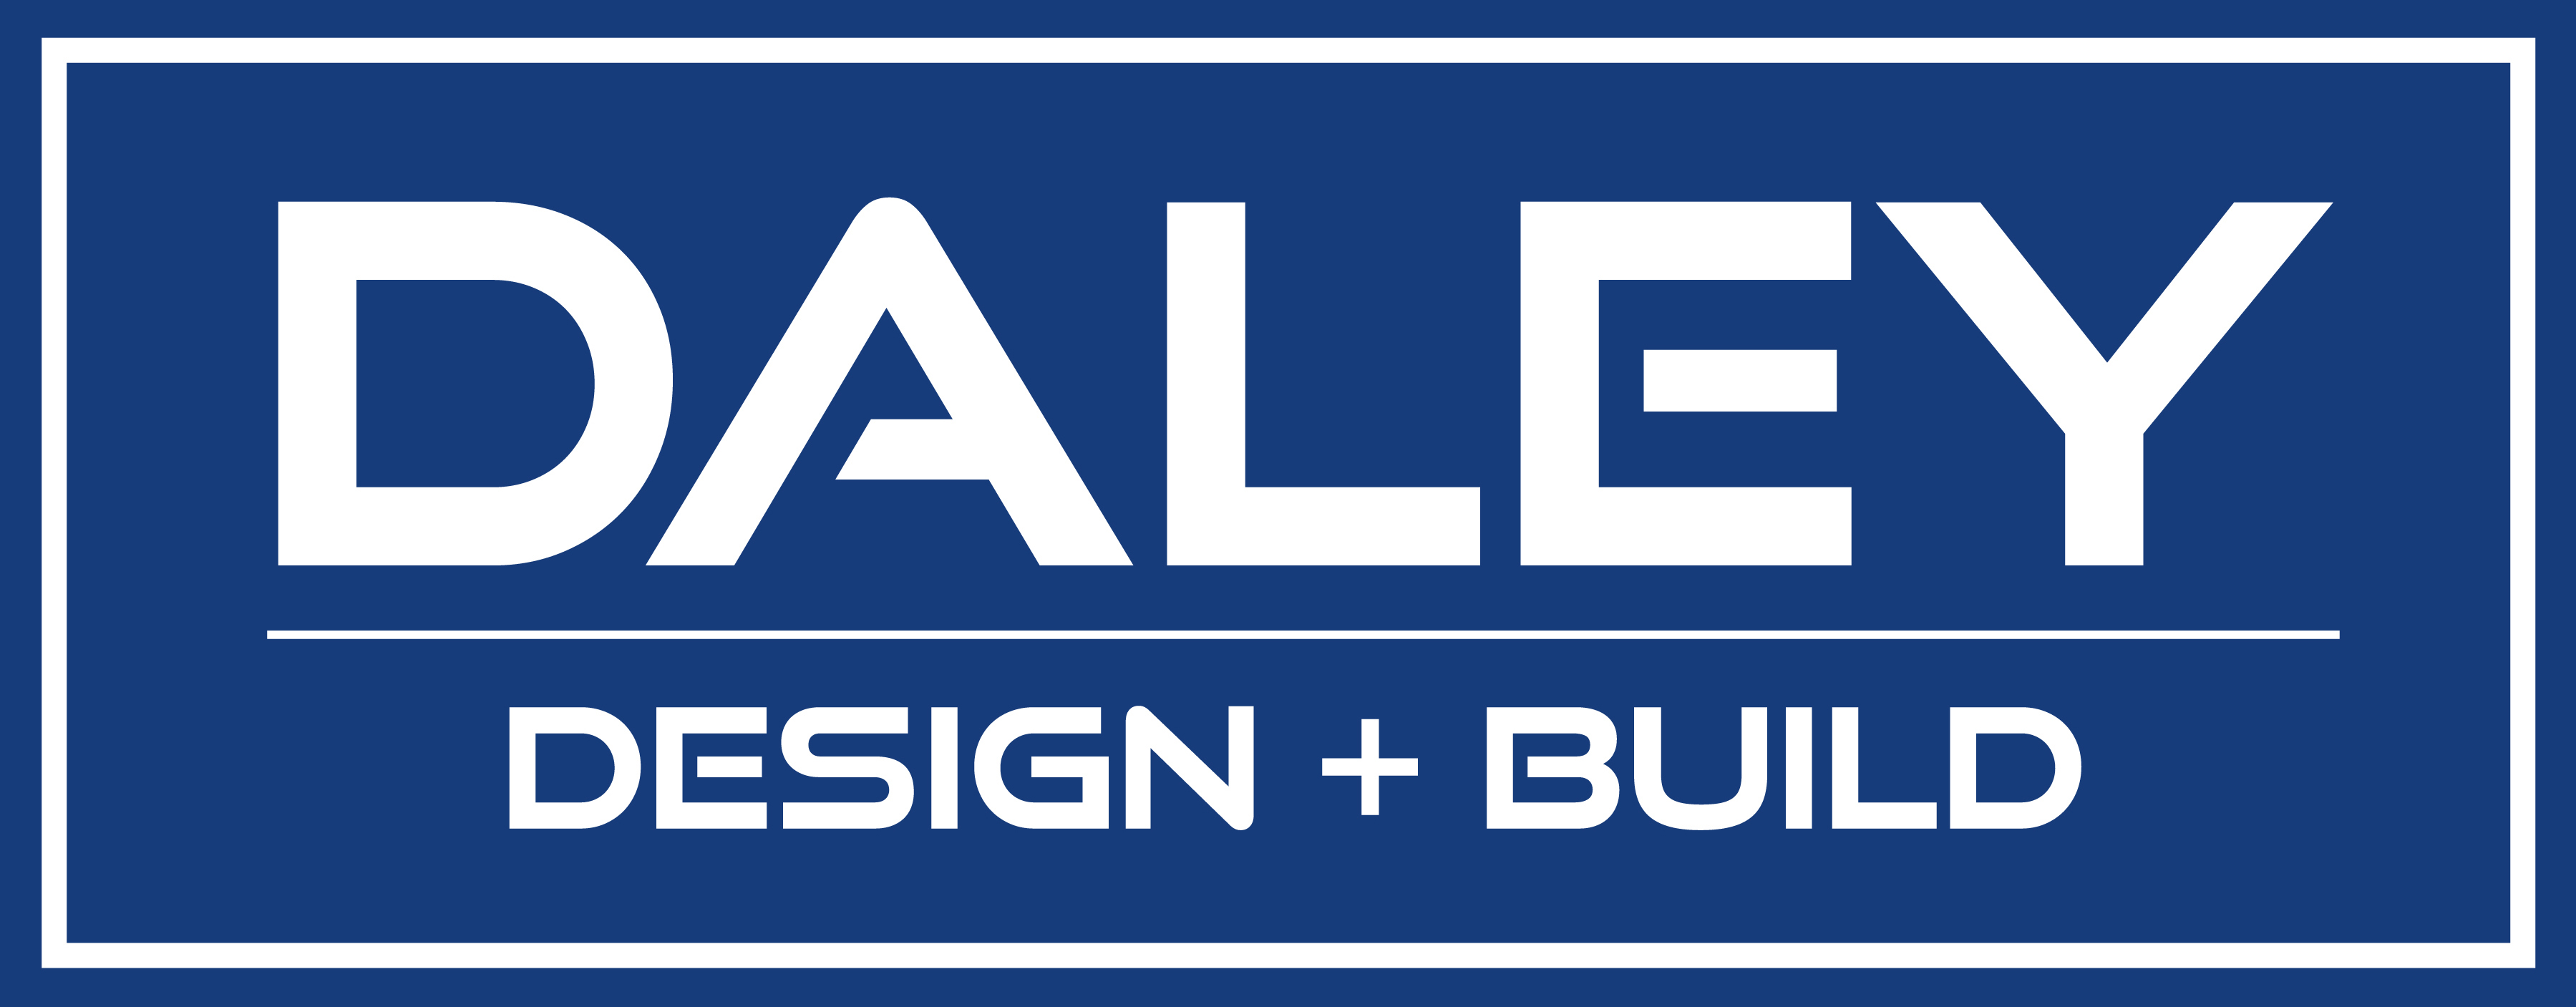 Daley Design + Build company logo